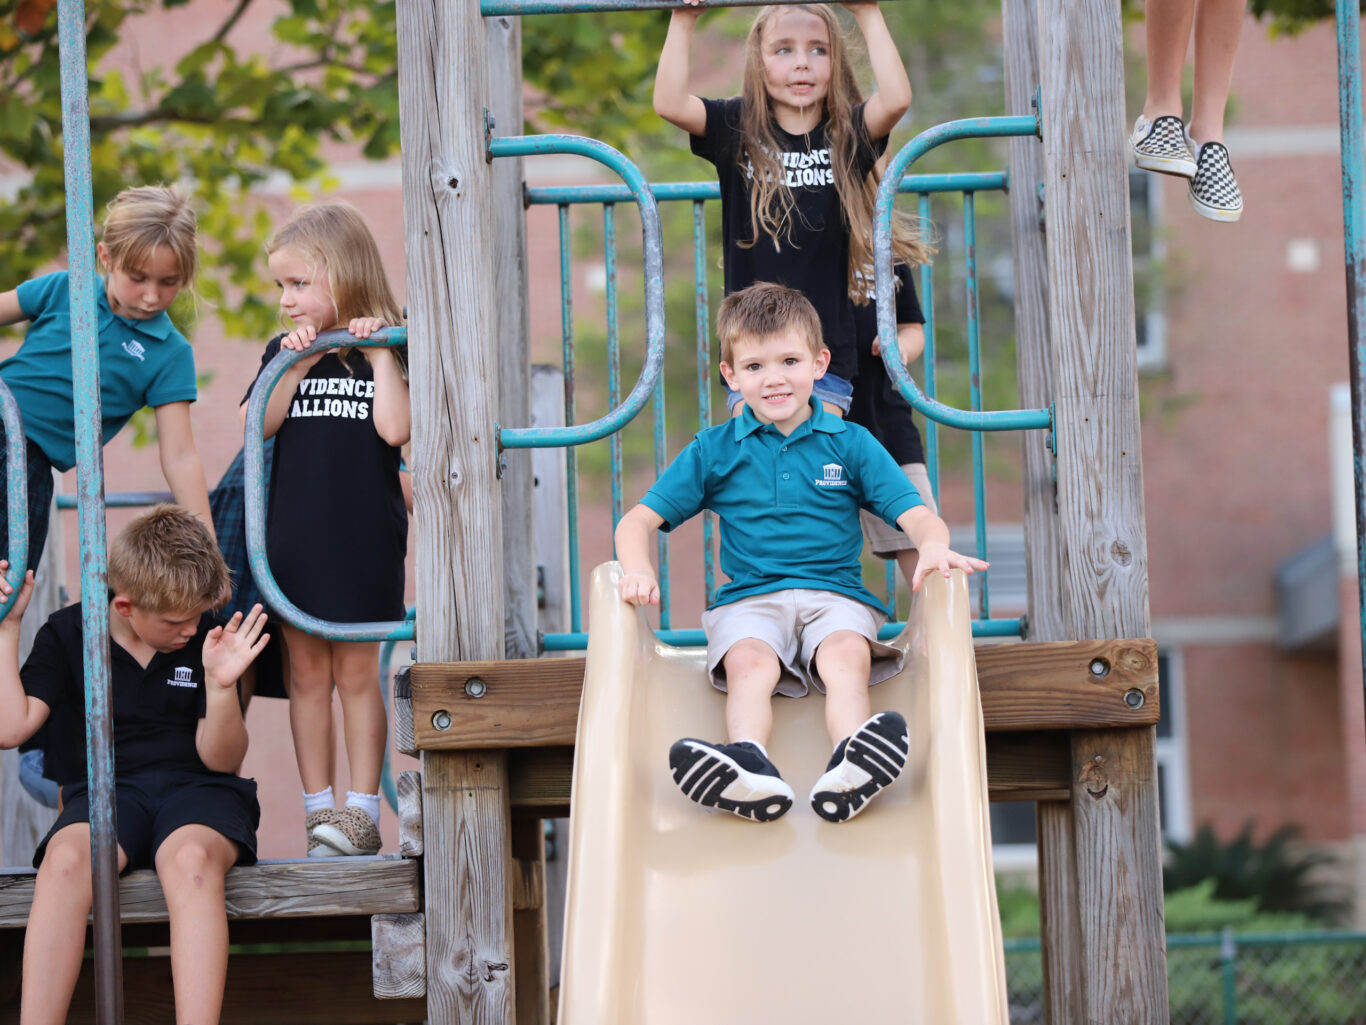 A group of children demonstrating leadership skills on a playground slide.